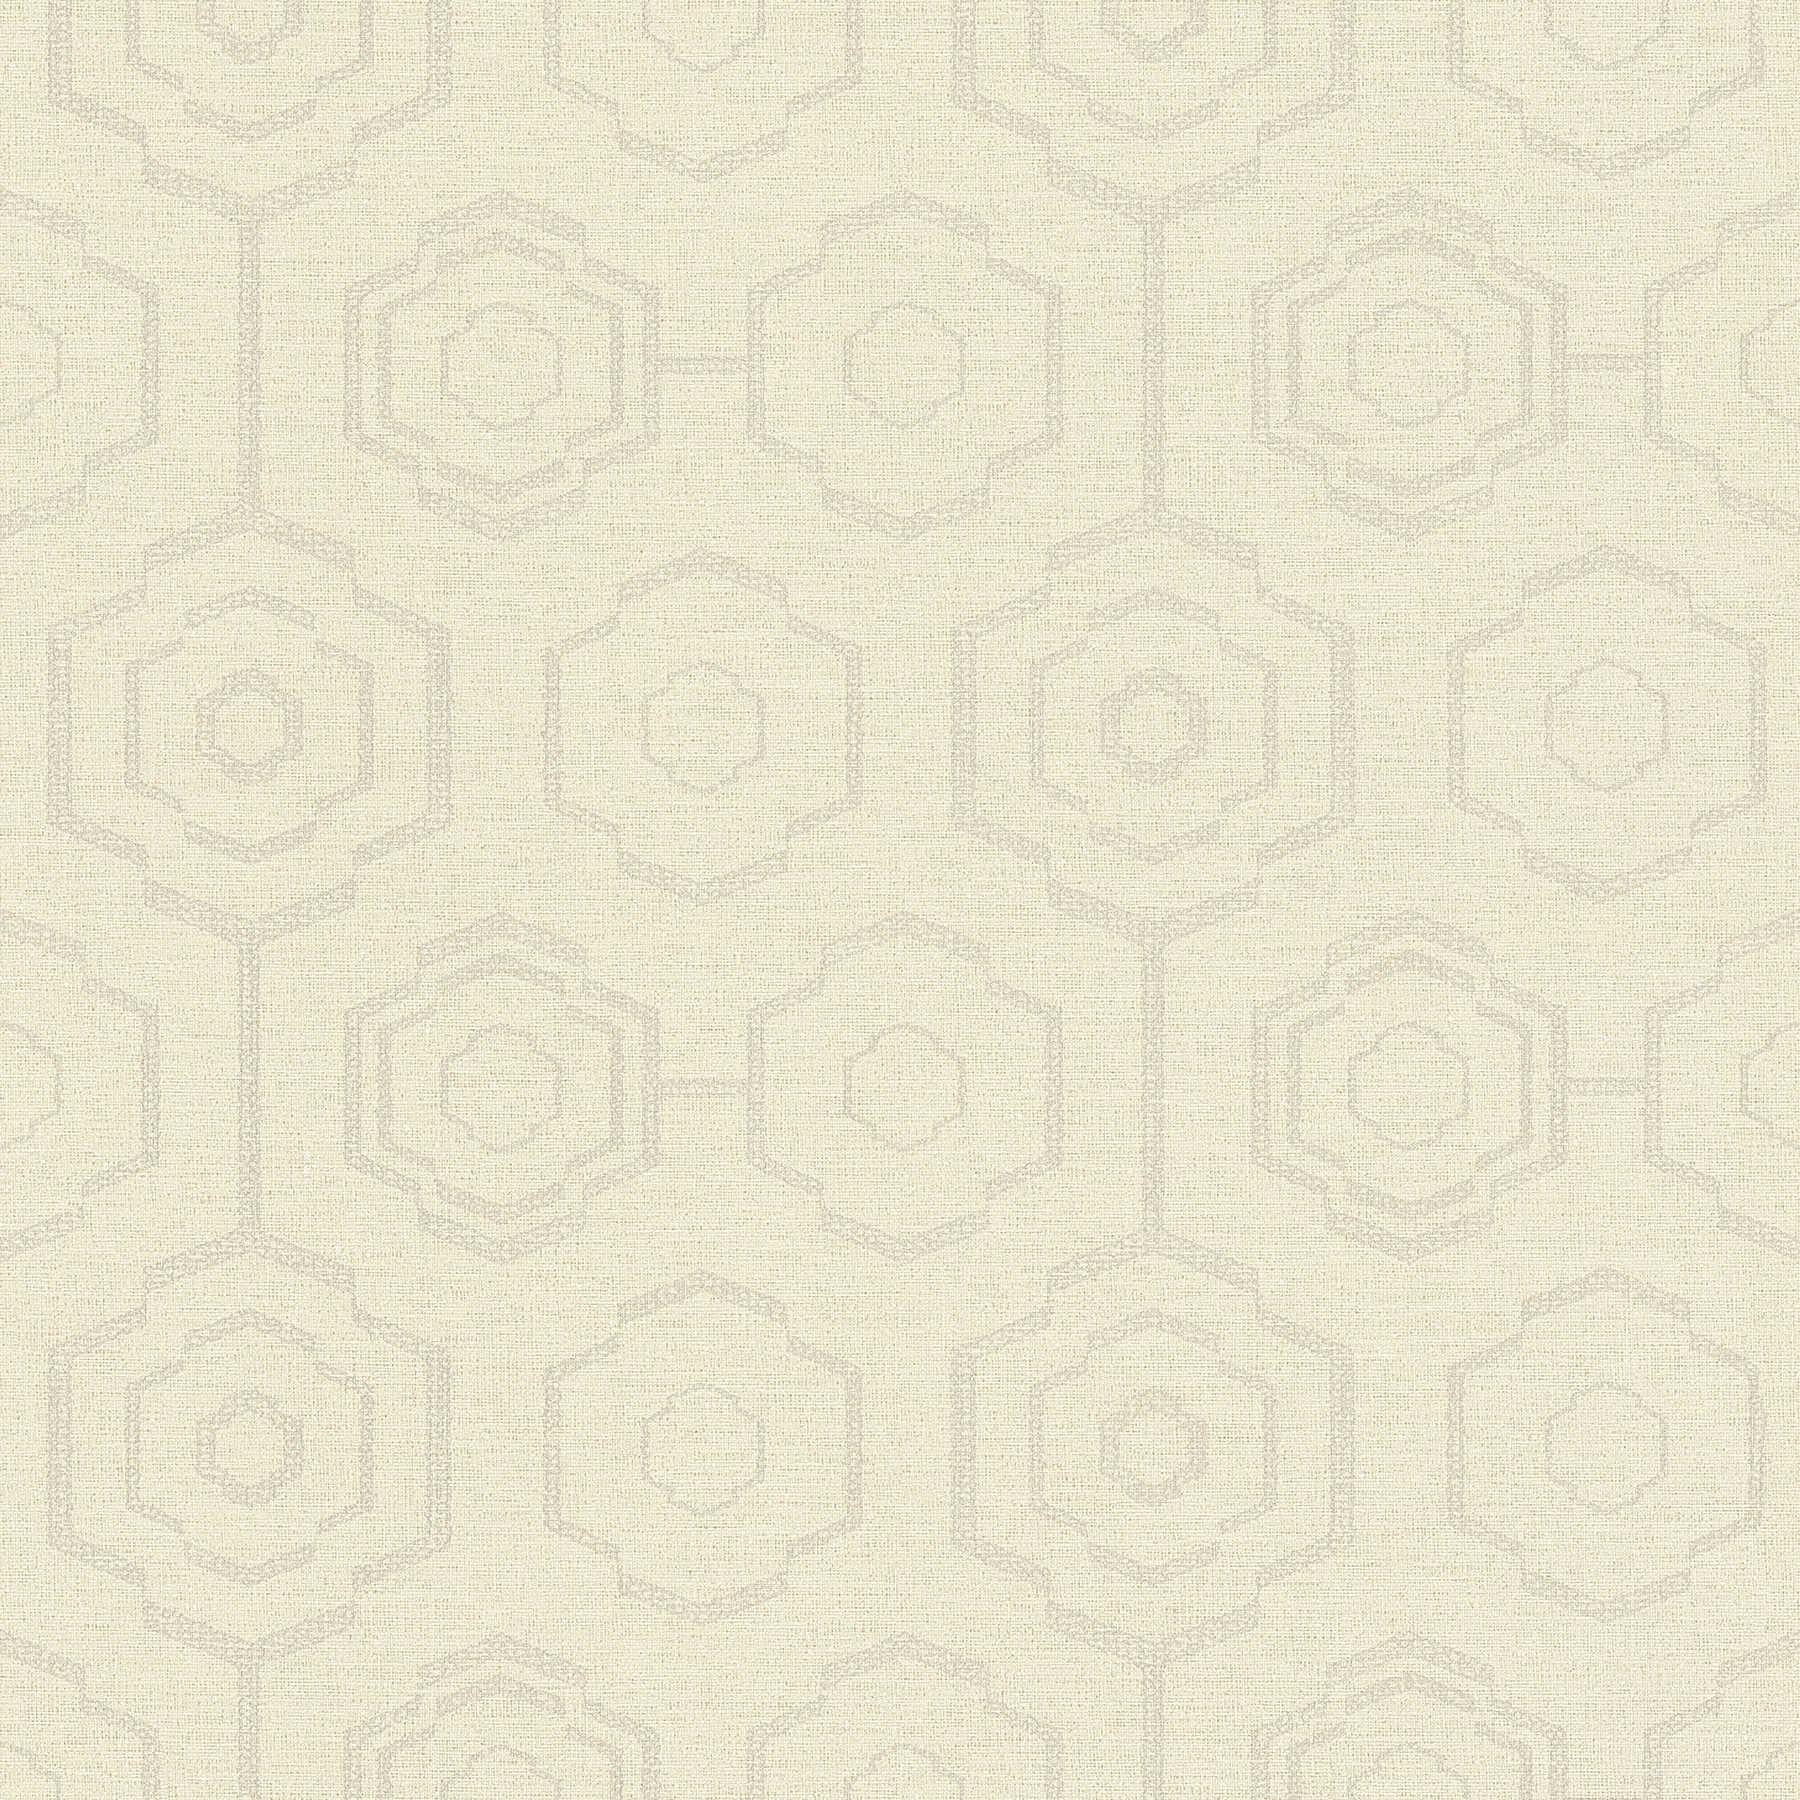 Textile optics wallpaper geometric design & gloss effect - cream, grey, beige
